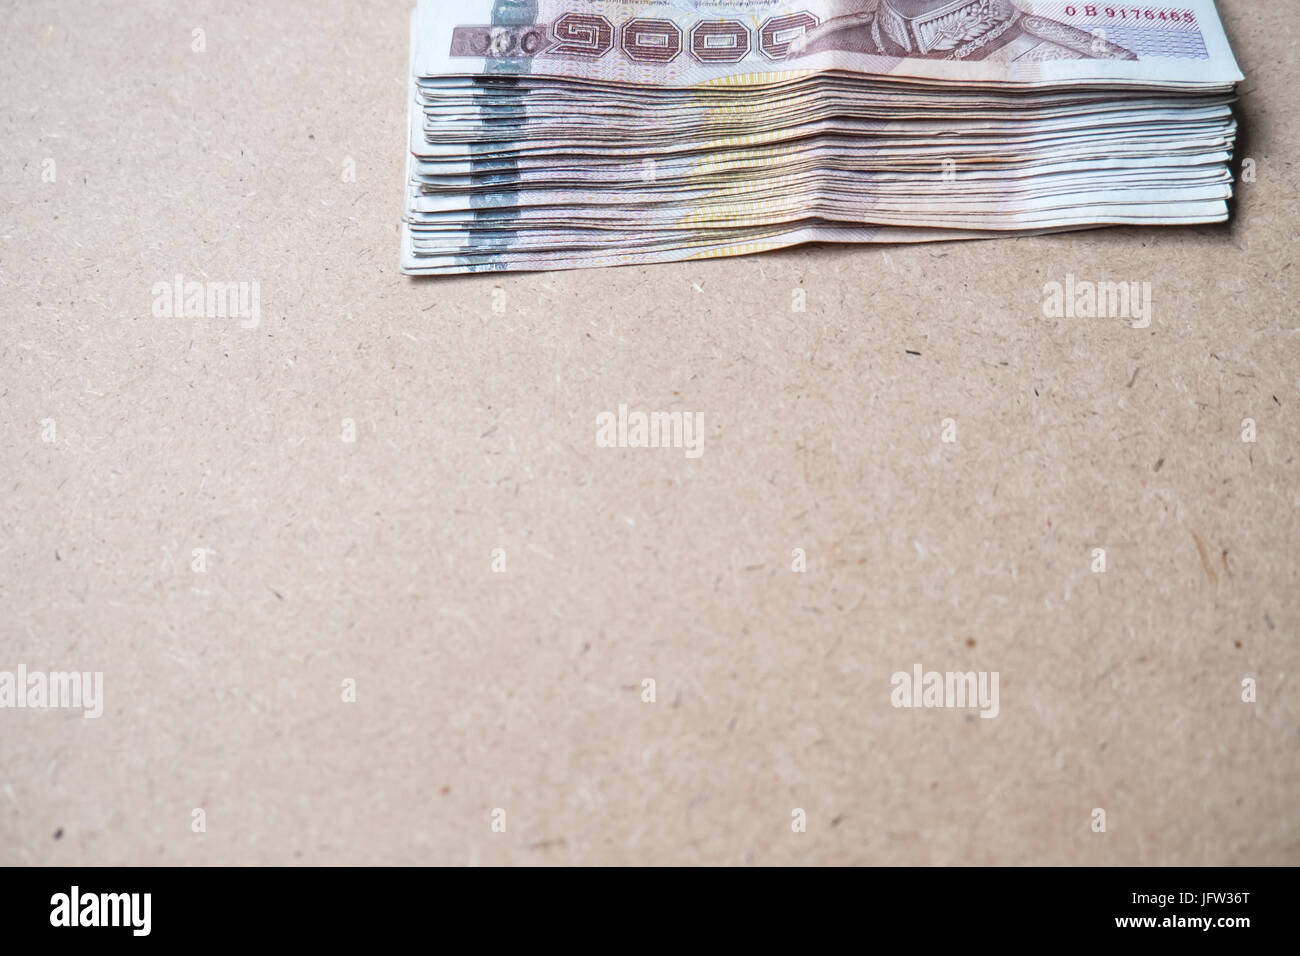 Thai money on brown background Stock Photo